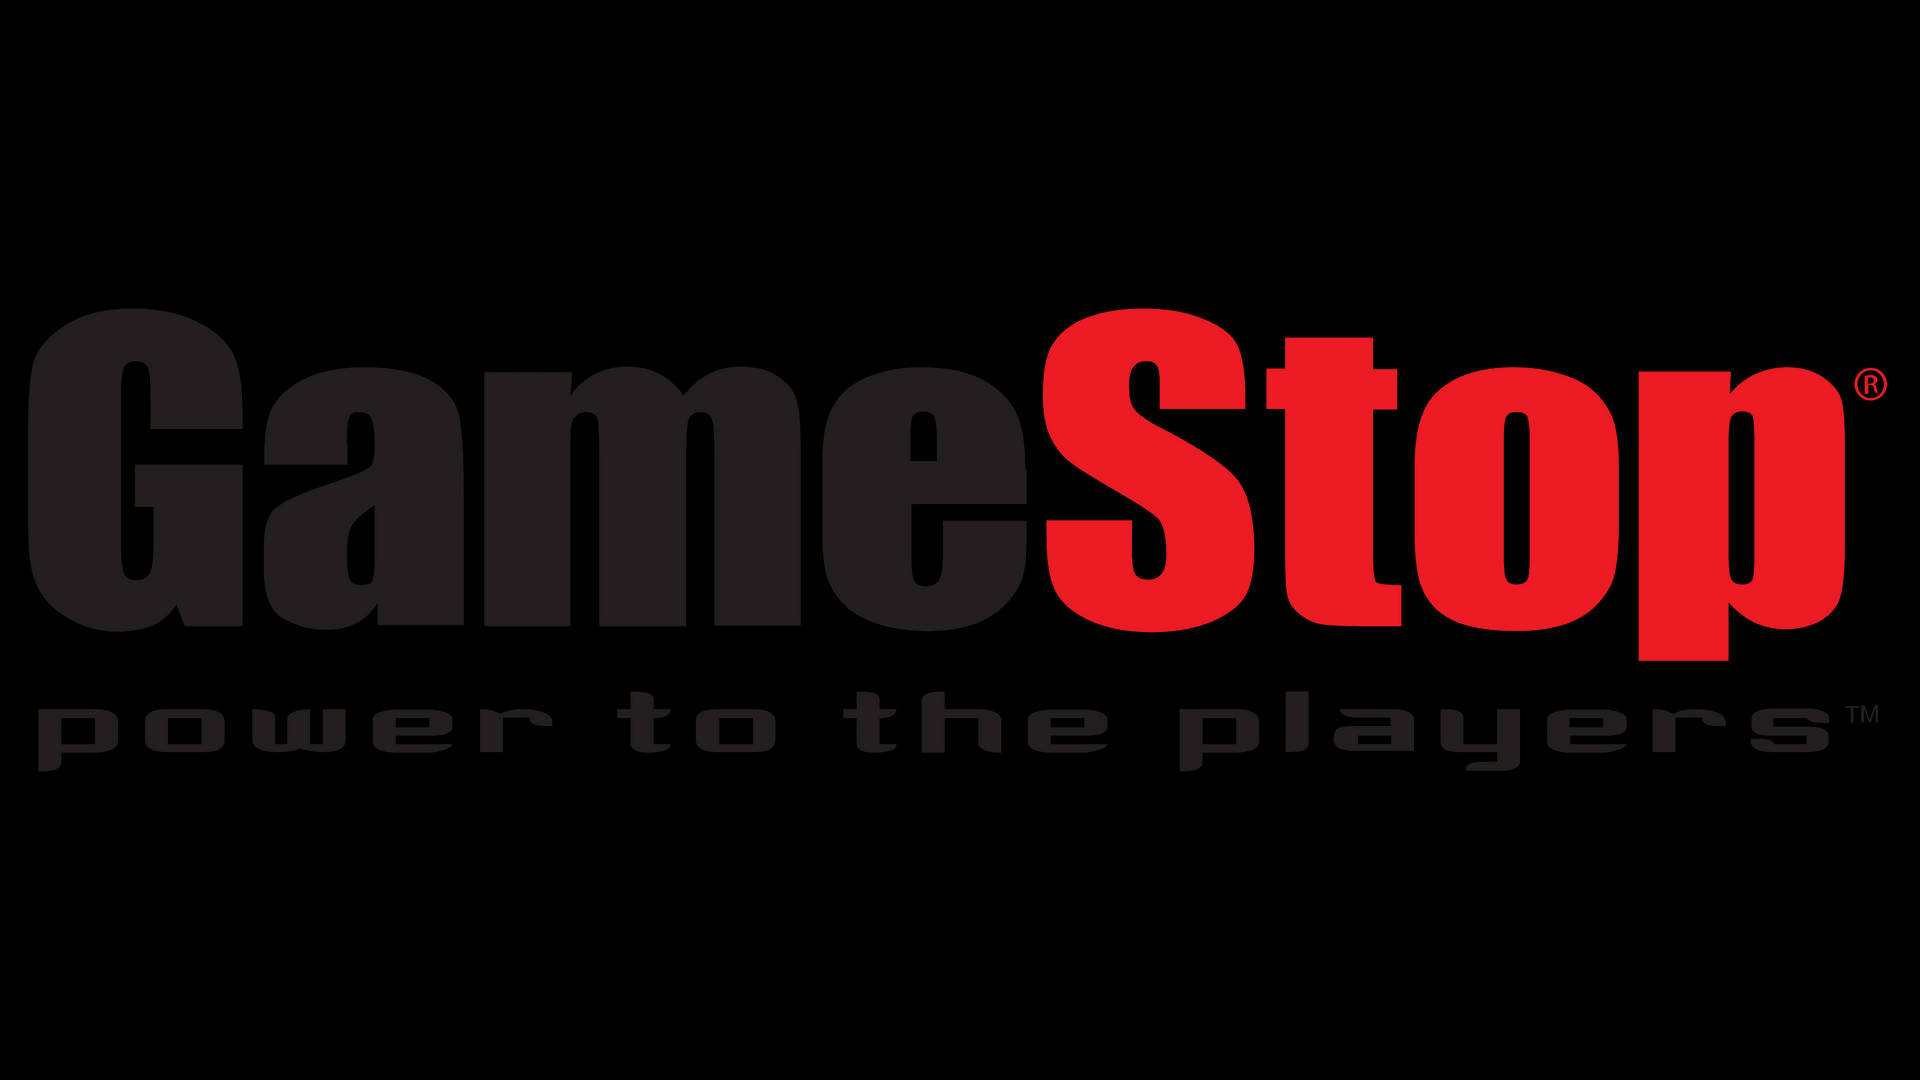 Gamestop Logo With Iconic Slogan